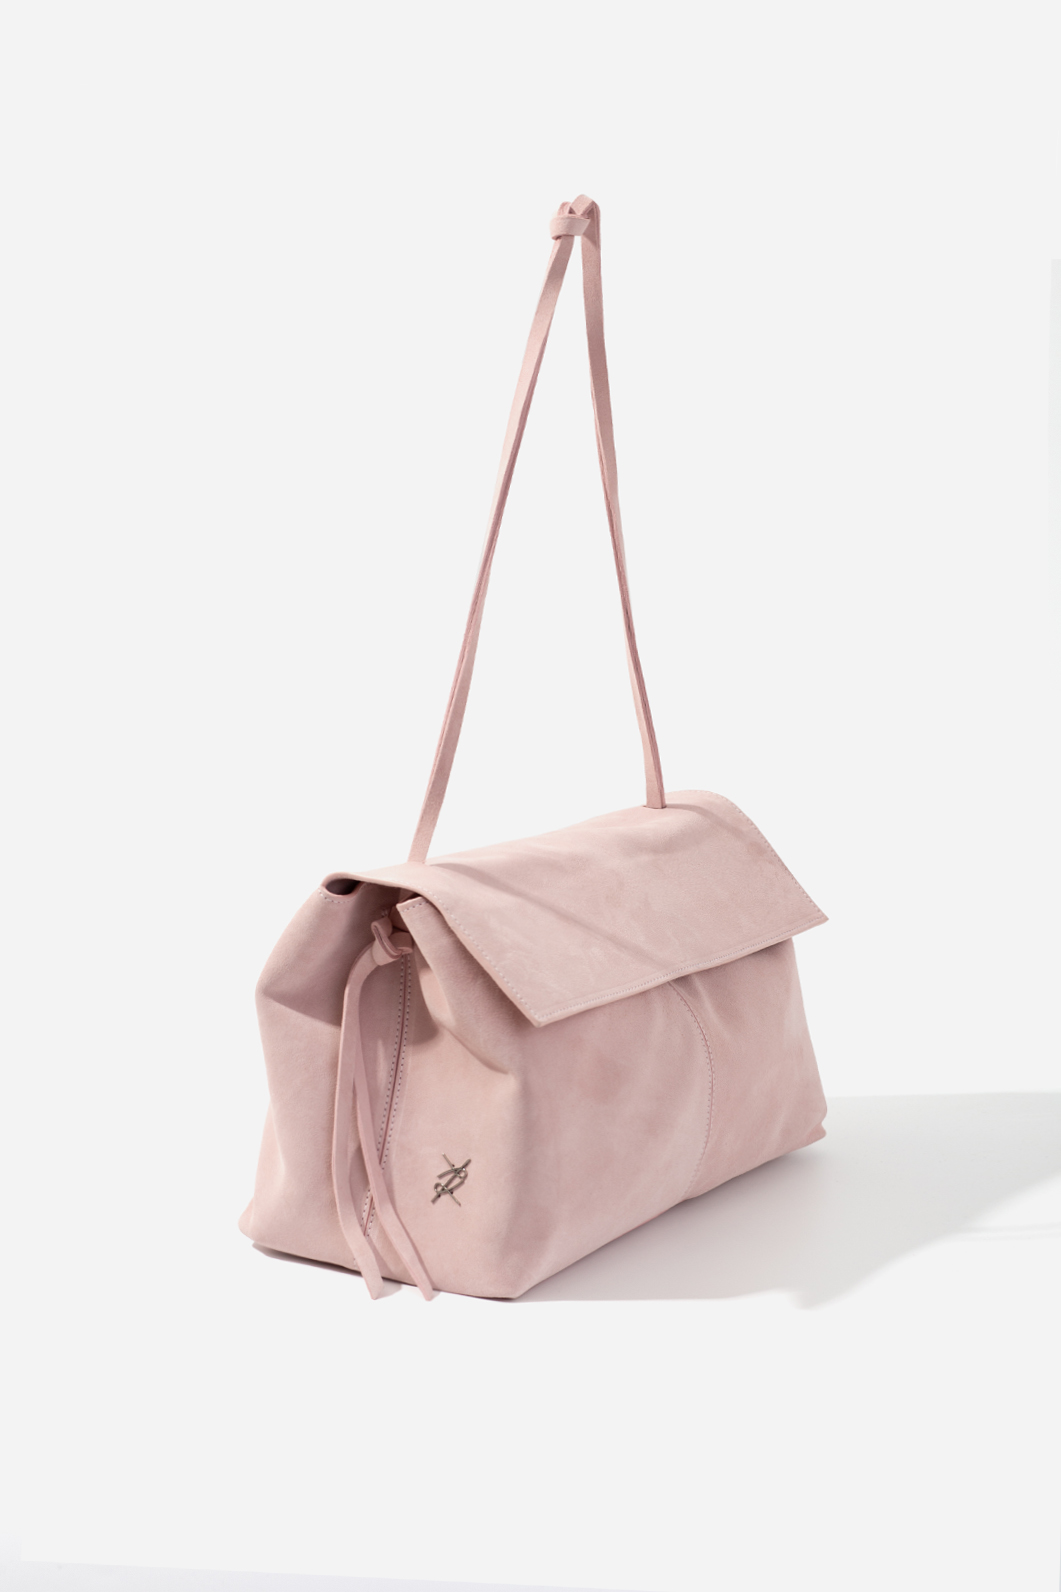 REBECCA GRANDE light pink bag